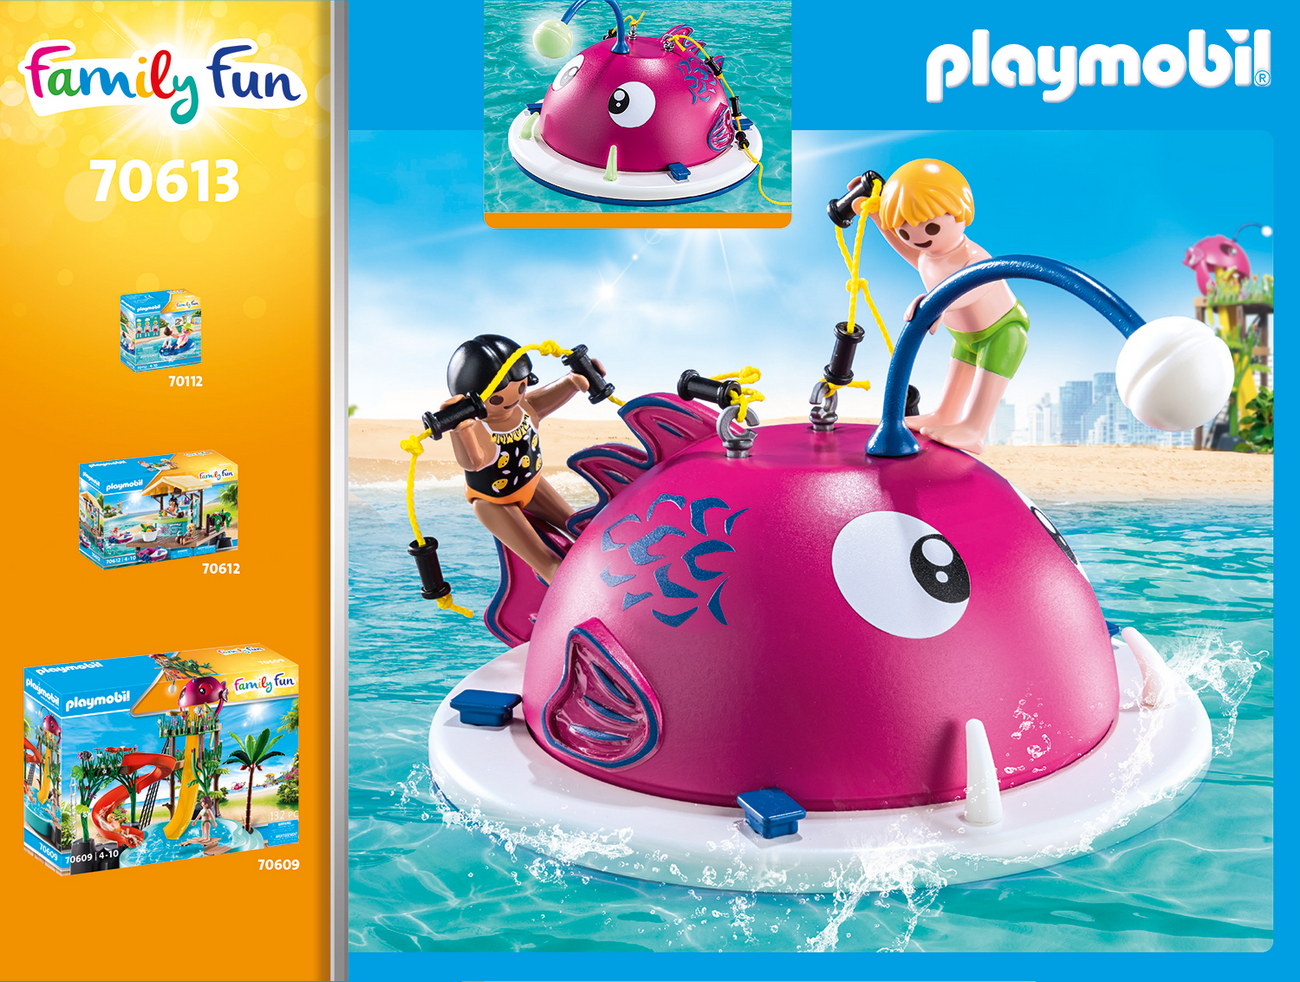 Playmobil 70613 - Kletter Schwimminsel - Family Fun